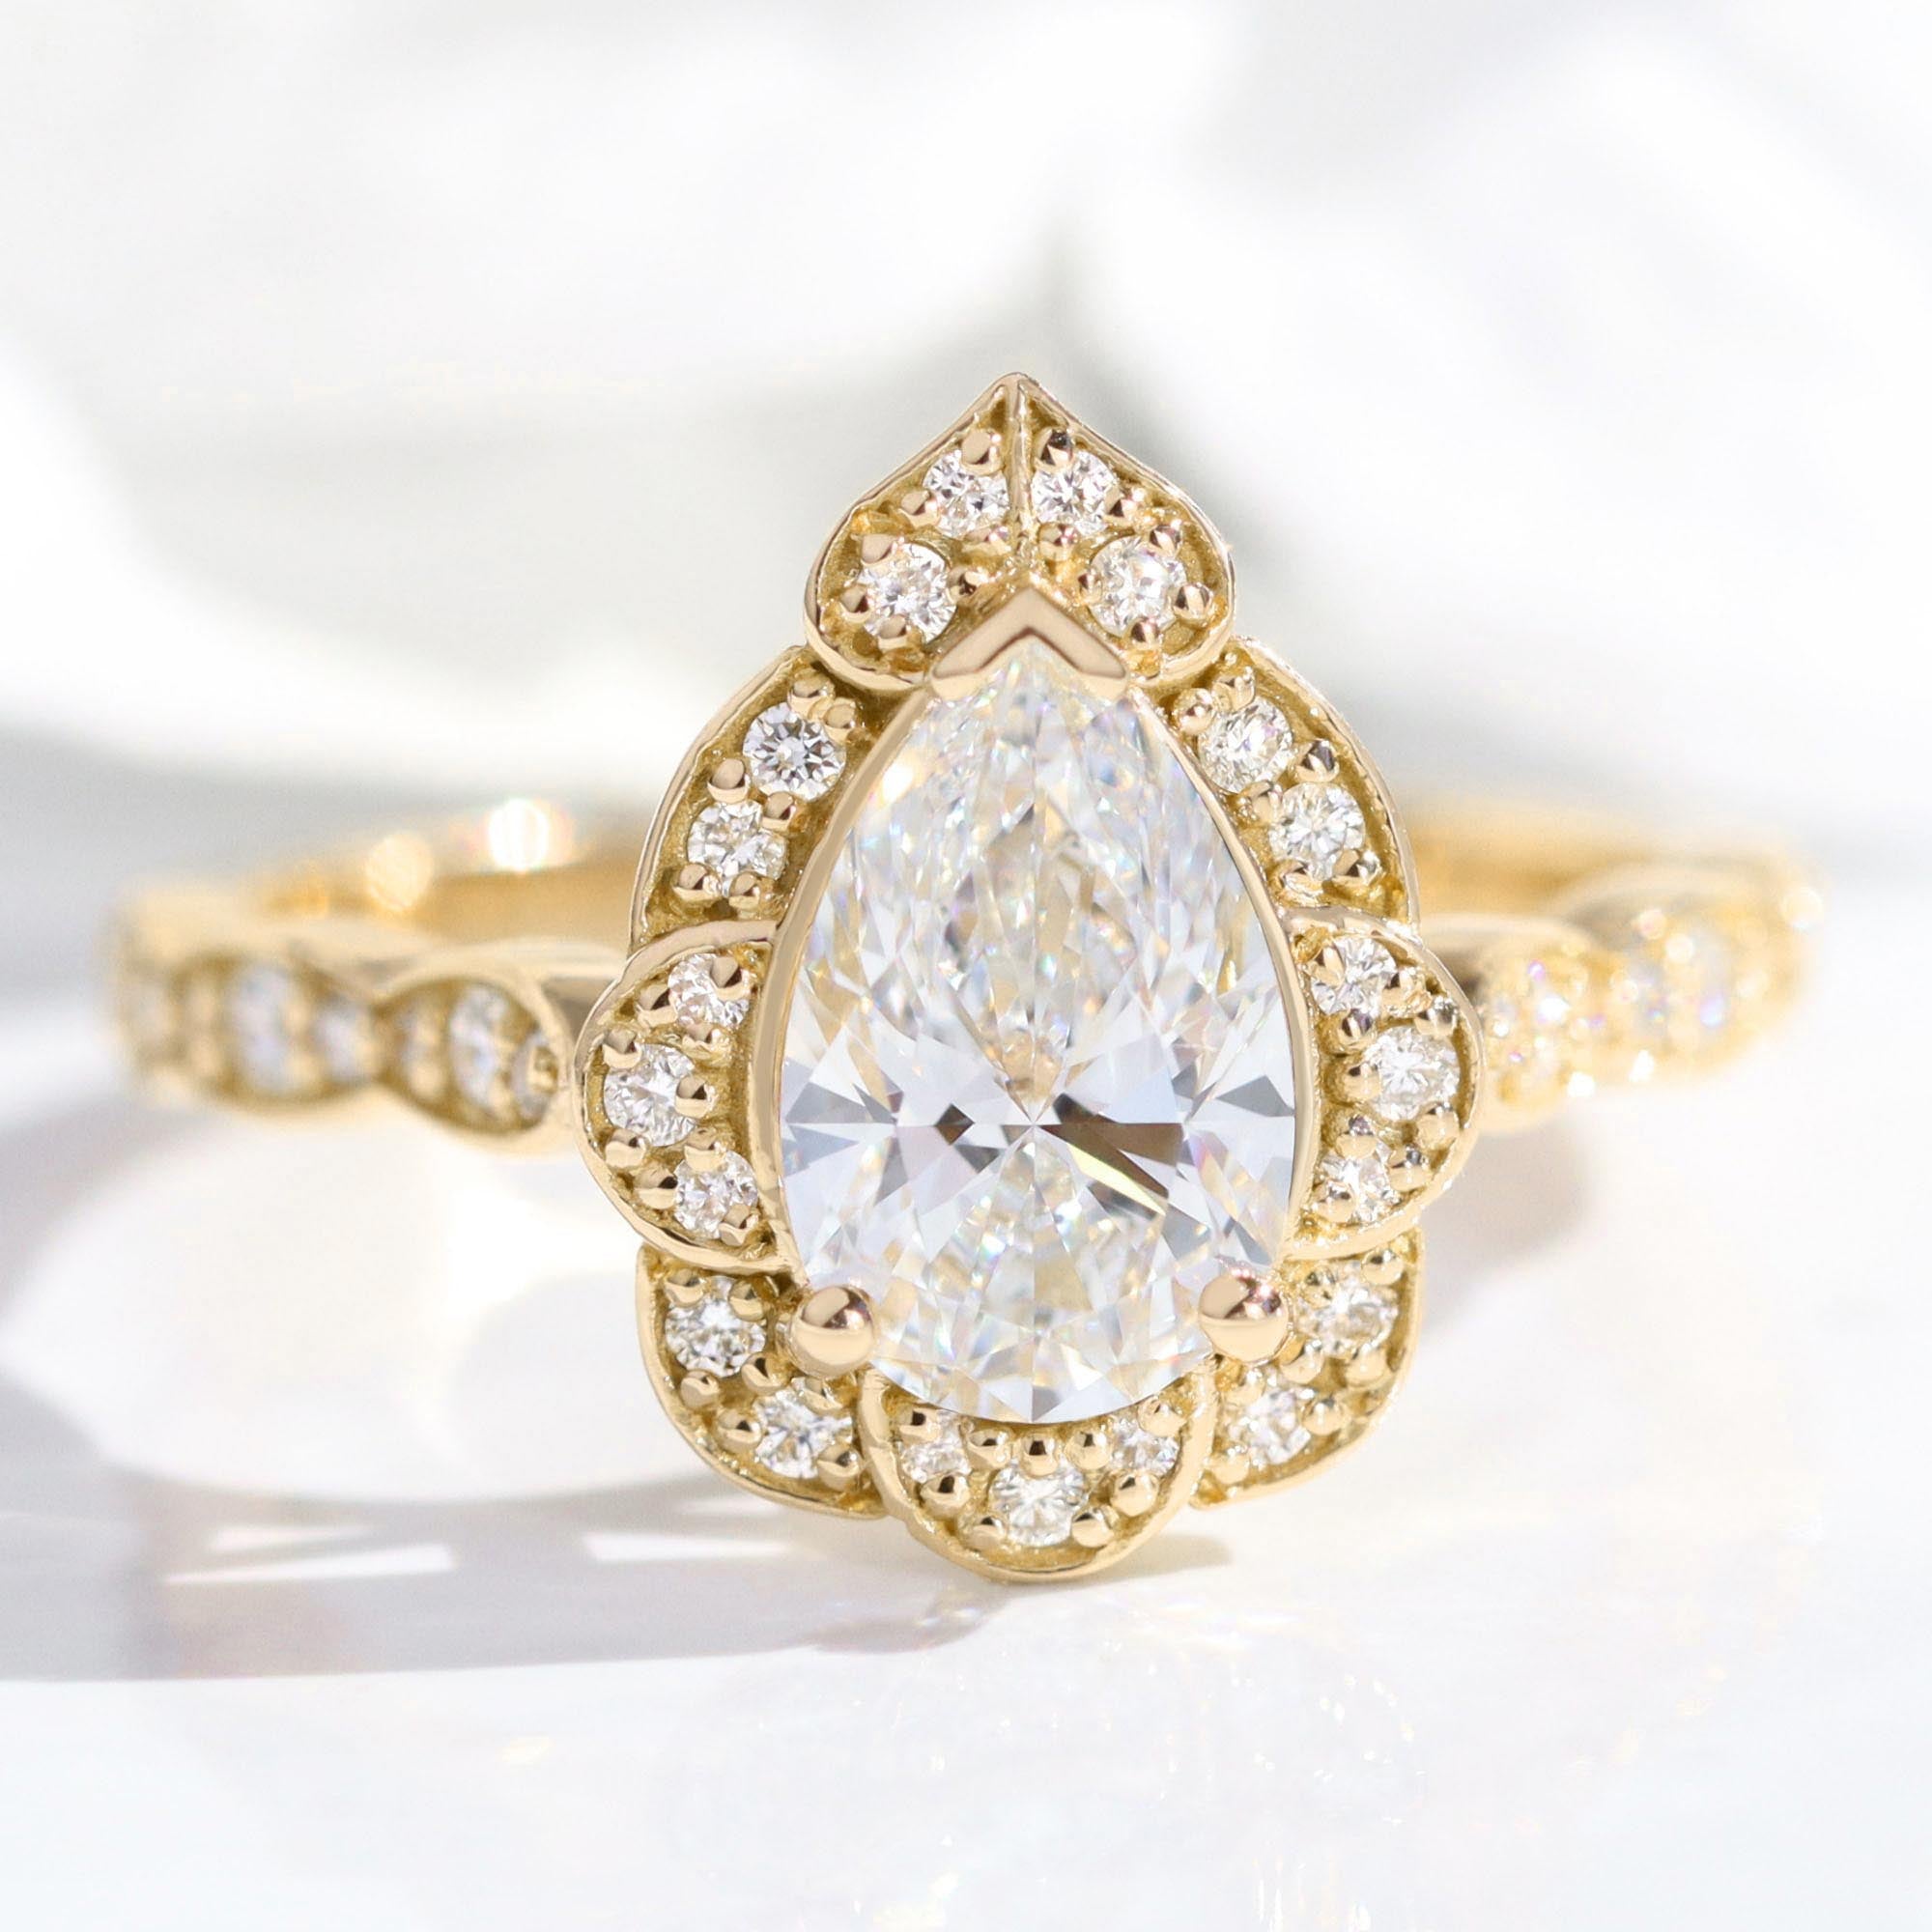 lab diamond ring yellow gold vintage halo pear diamond engagement ring La More Design Jewelry